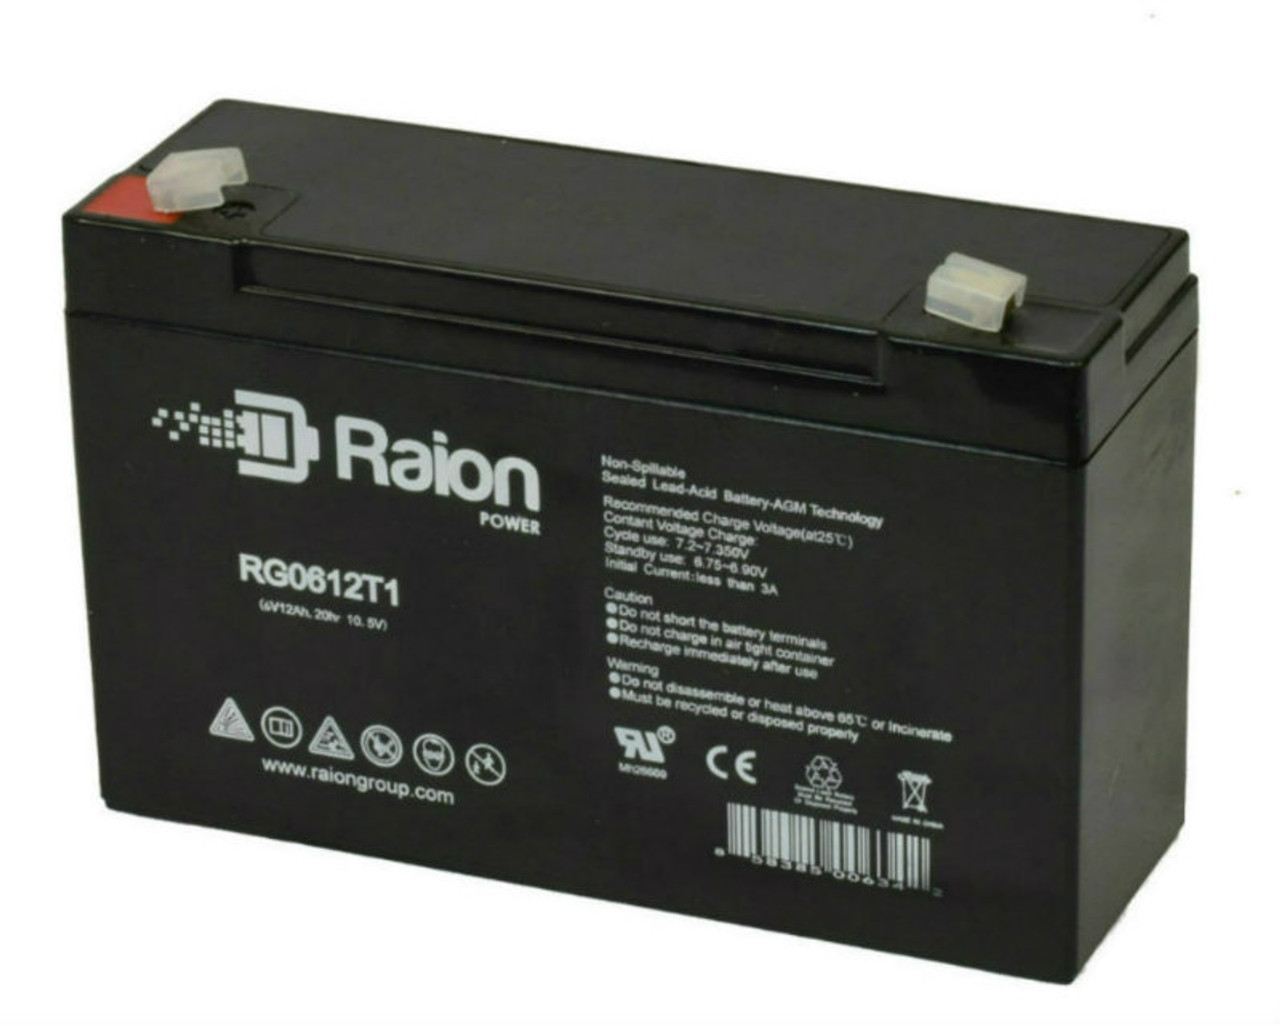 Raion Power RG06120T1 Replacement 6V 12Ah Emergency Light Battery for Sentry Lite SCR-525-EL